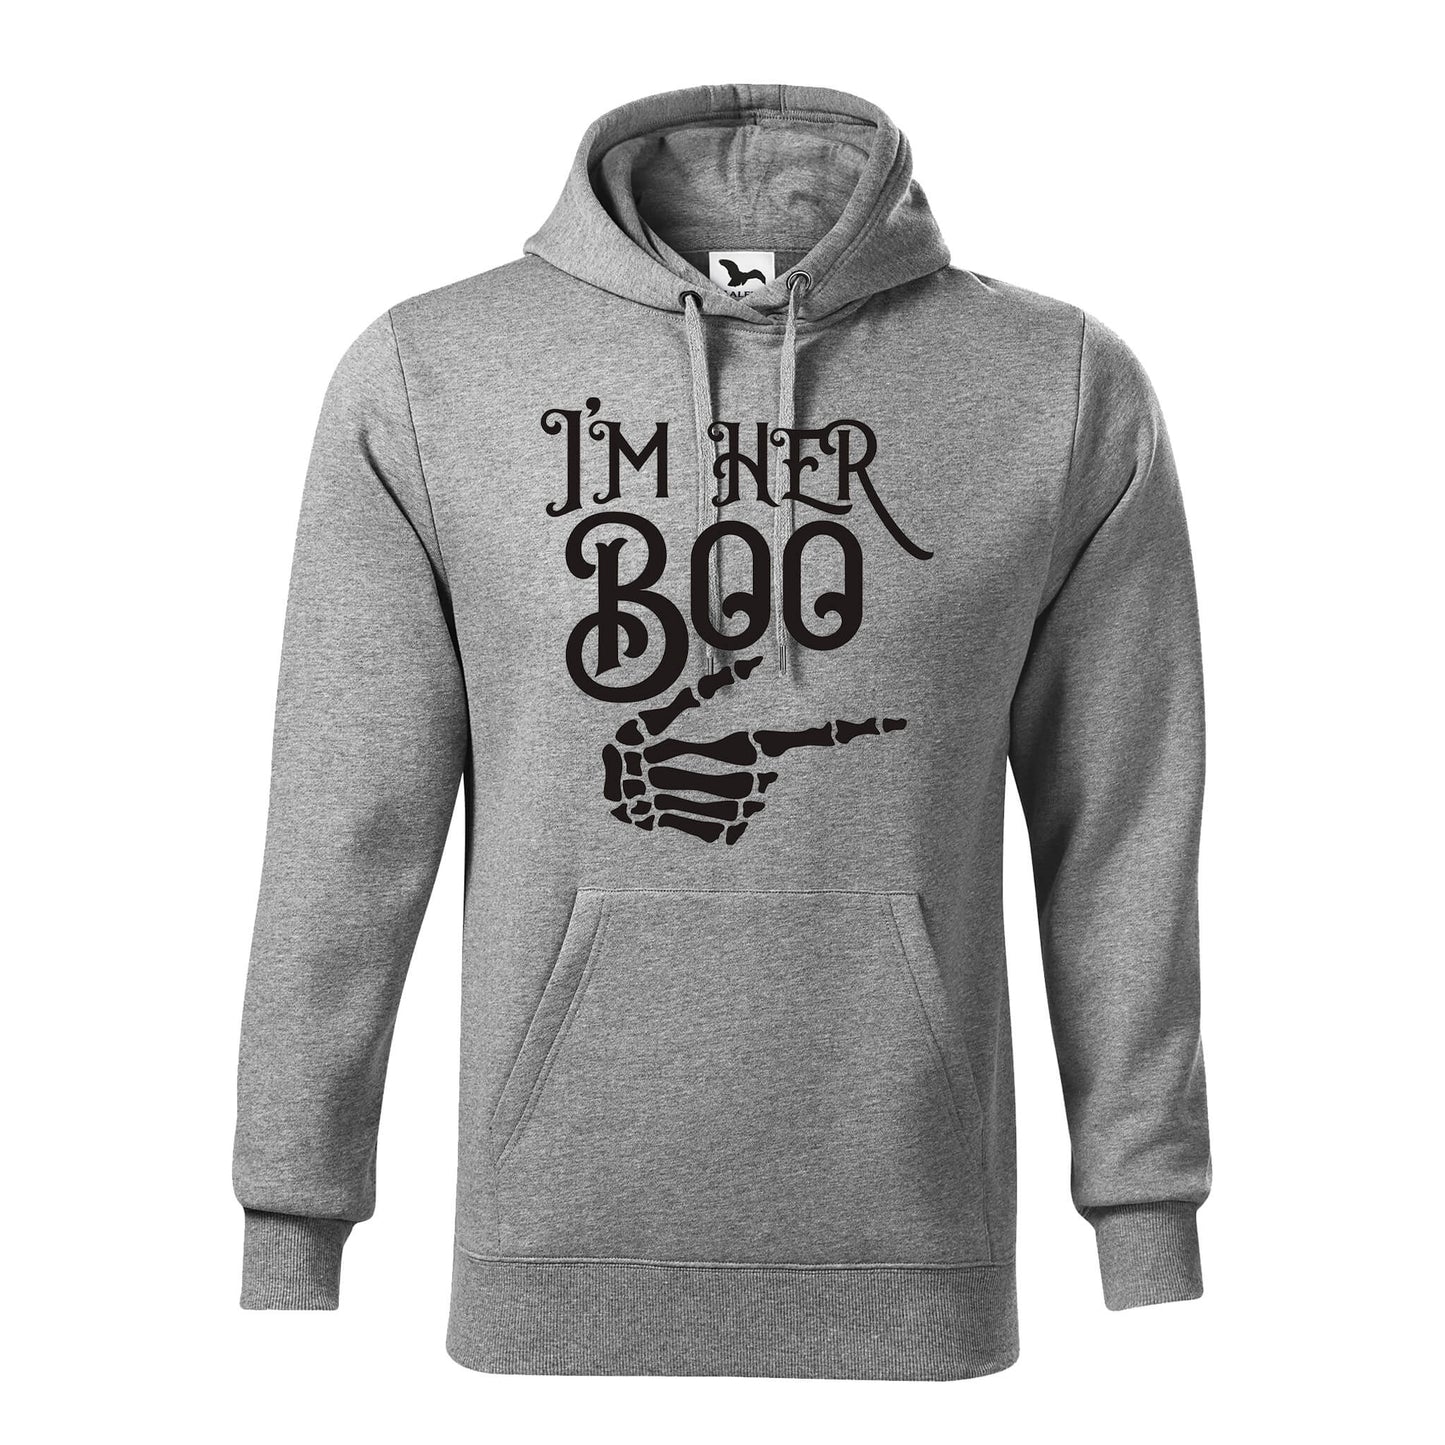 Im her boo hoodie - rvdesignprint